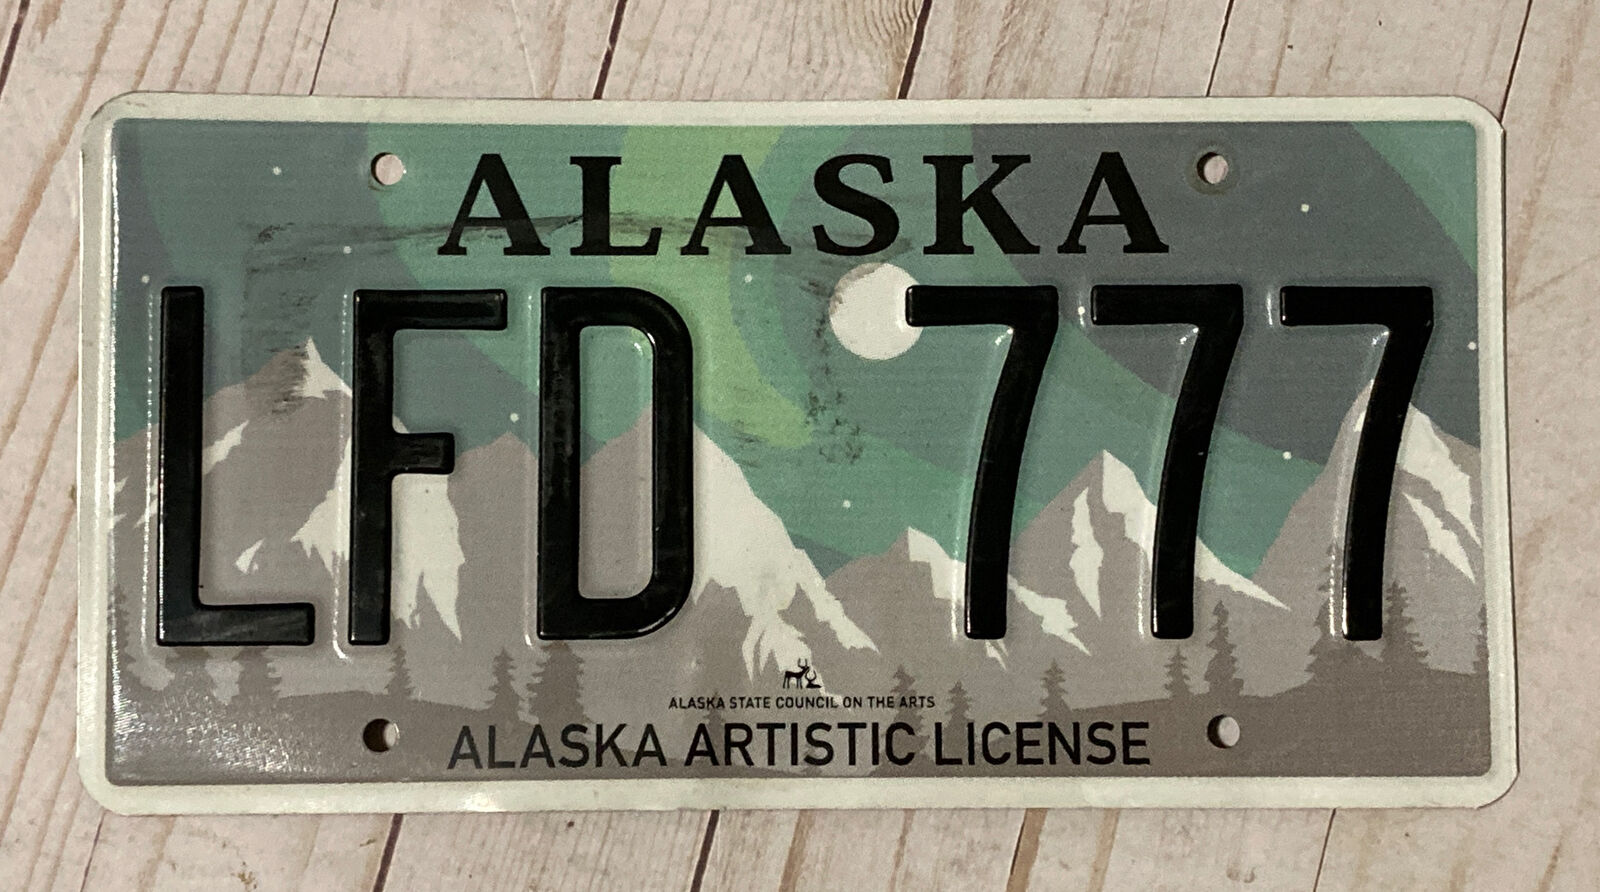 Alaska Auto License Plate #lfd-777 Artistic Aurora Arts Design - Used & Expired